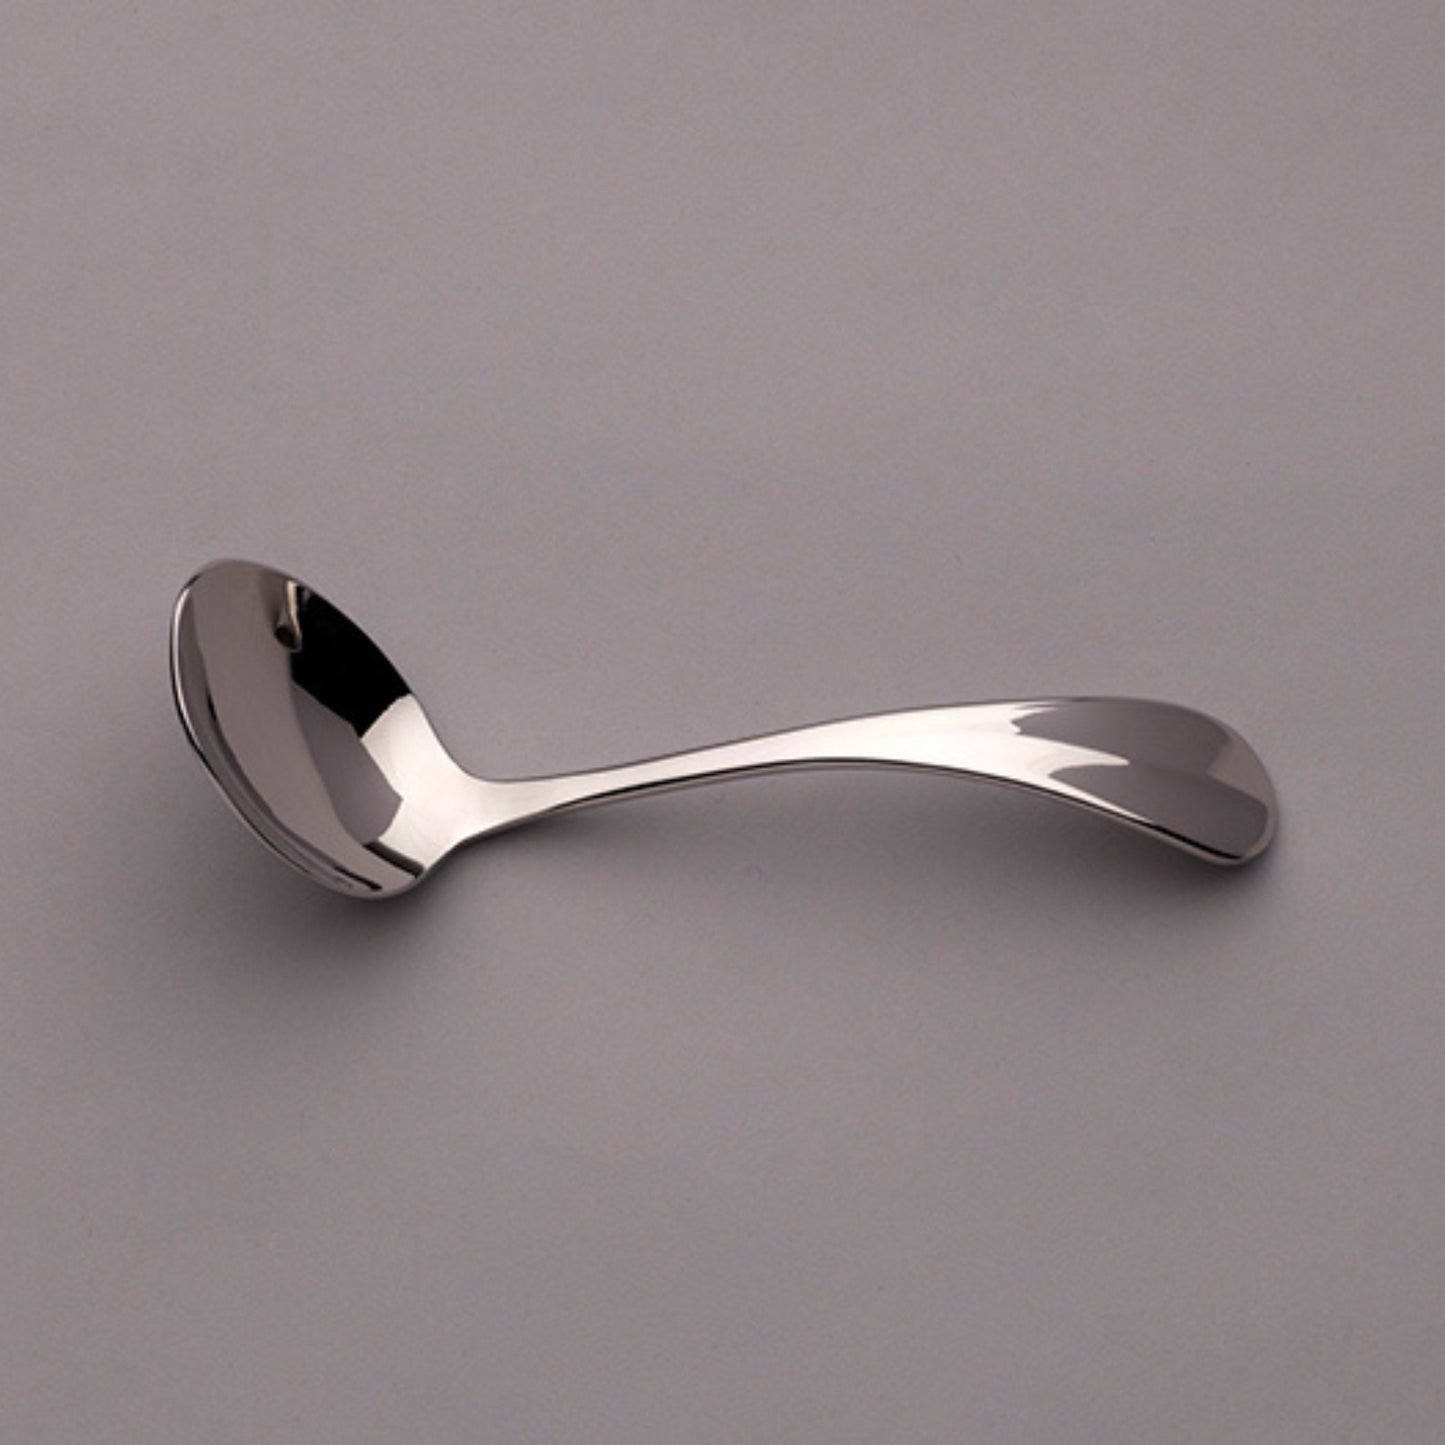 Dubarry silver plated flatware cutlery